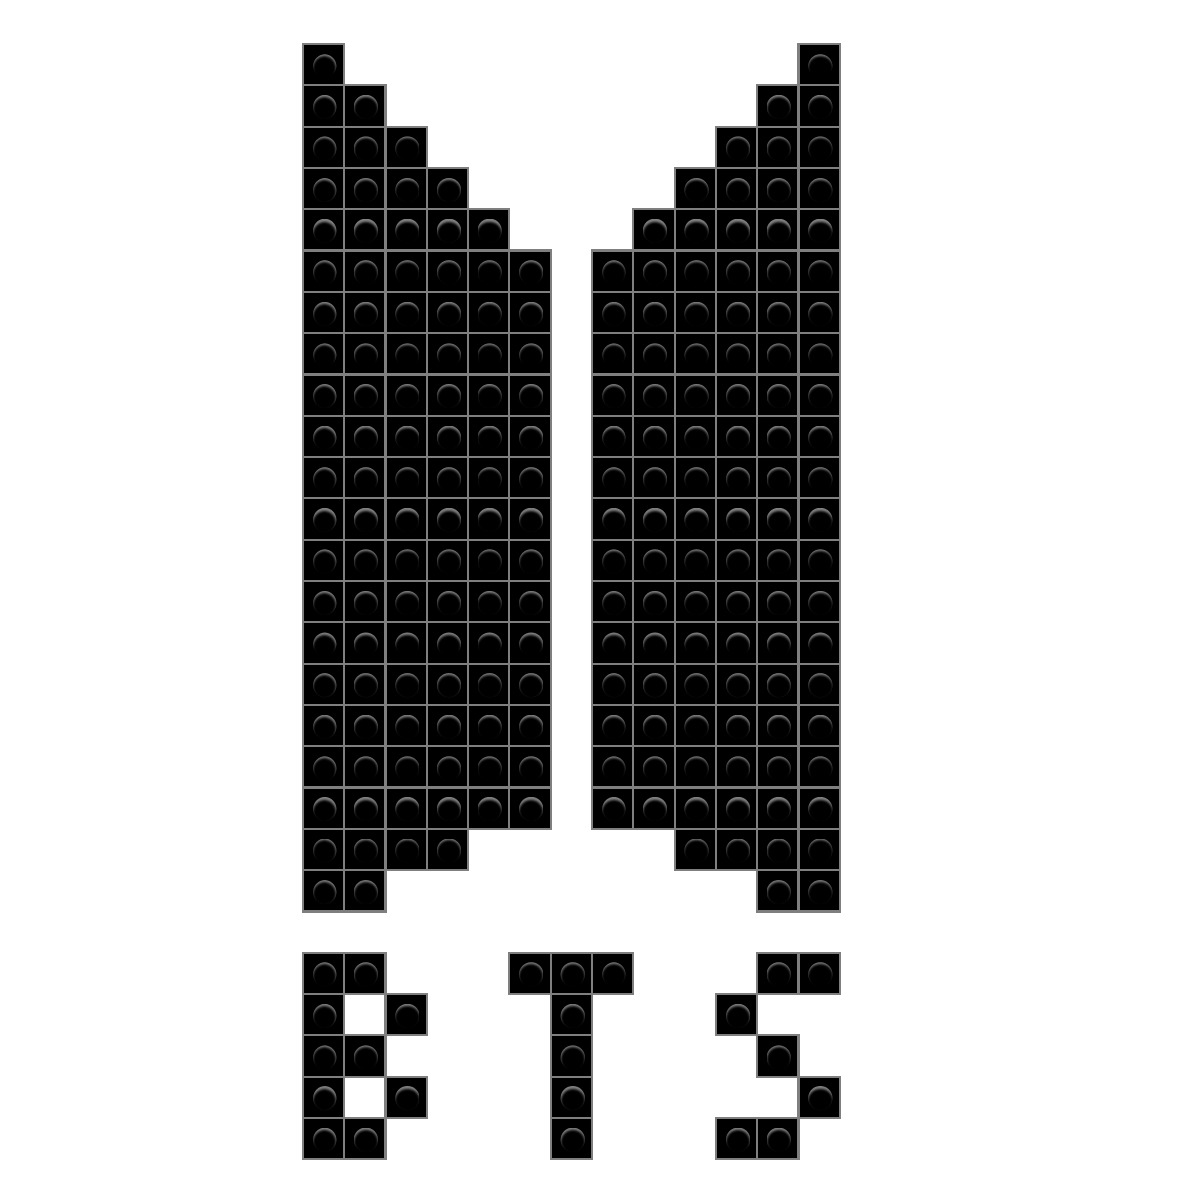 Pixel Art Grid Kpop - Pixel Art Grid Gallery